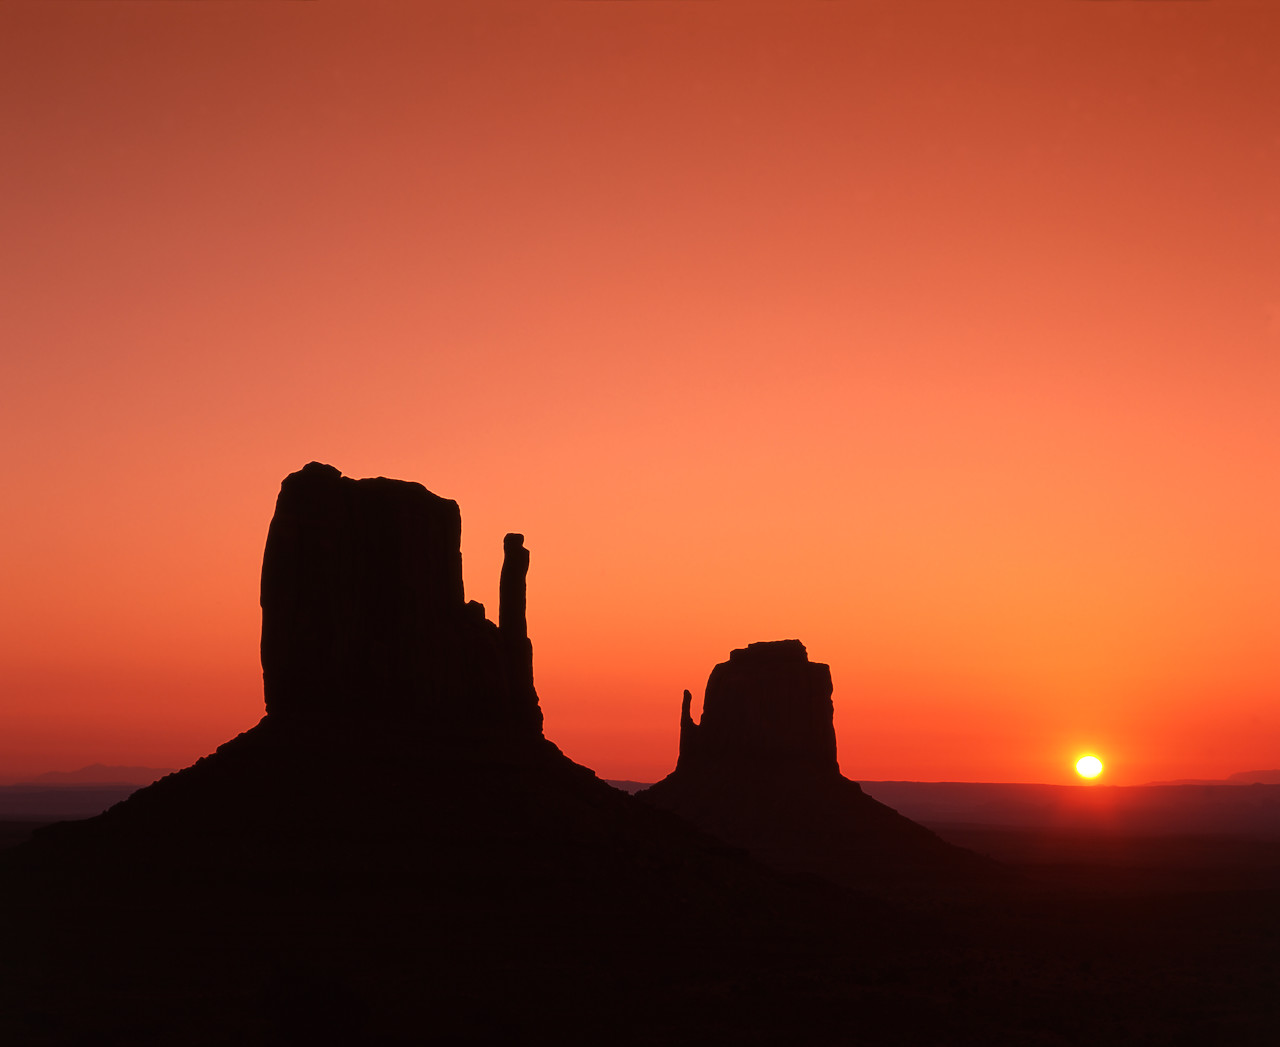 #990607-2 - The Mittens at Sunrise, Monument ValleyTribal Park, Arizona, USA